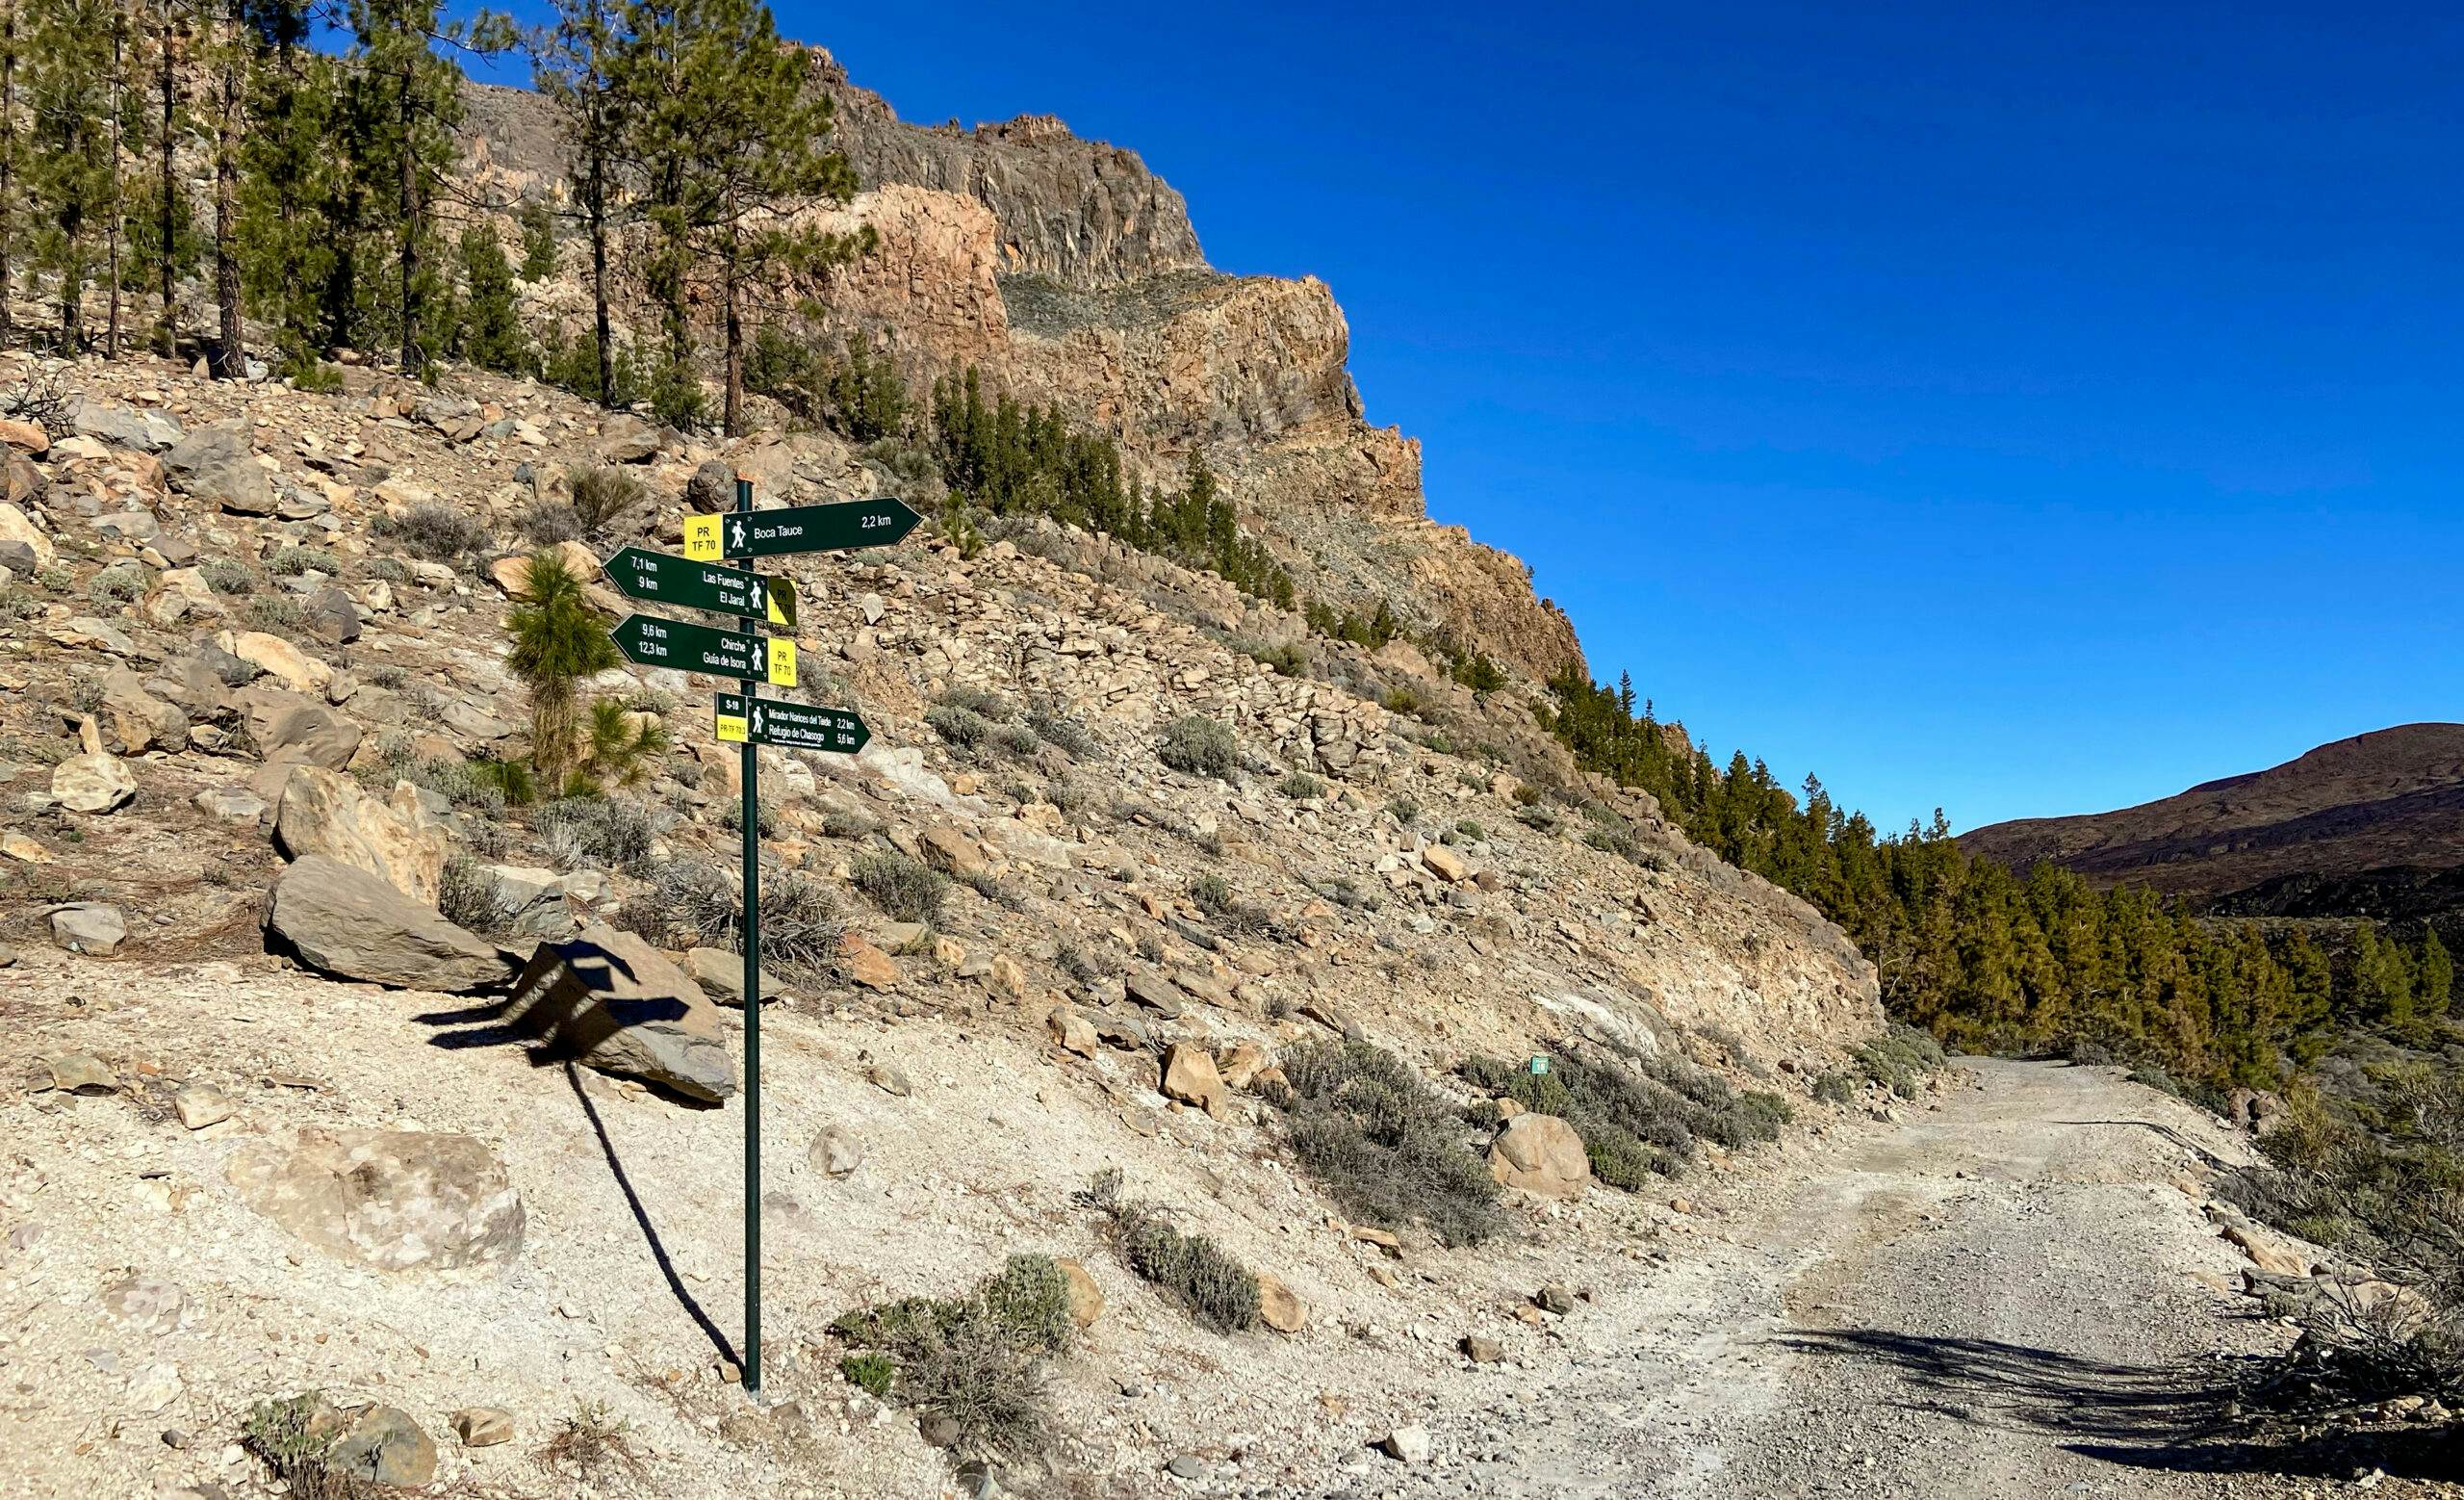 Road from Montaña El Cedro, hiking junction